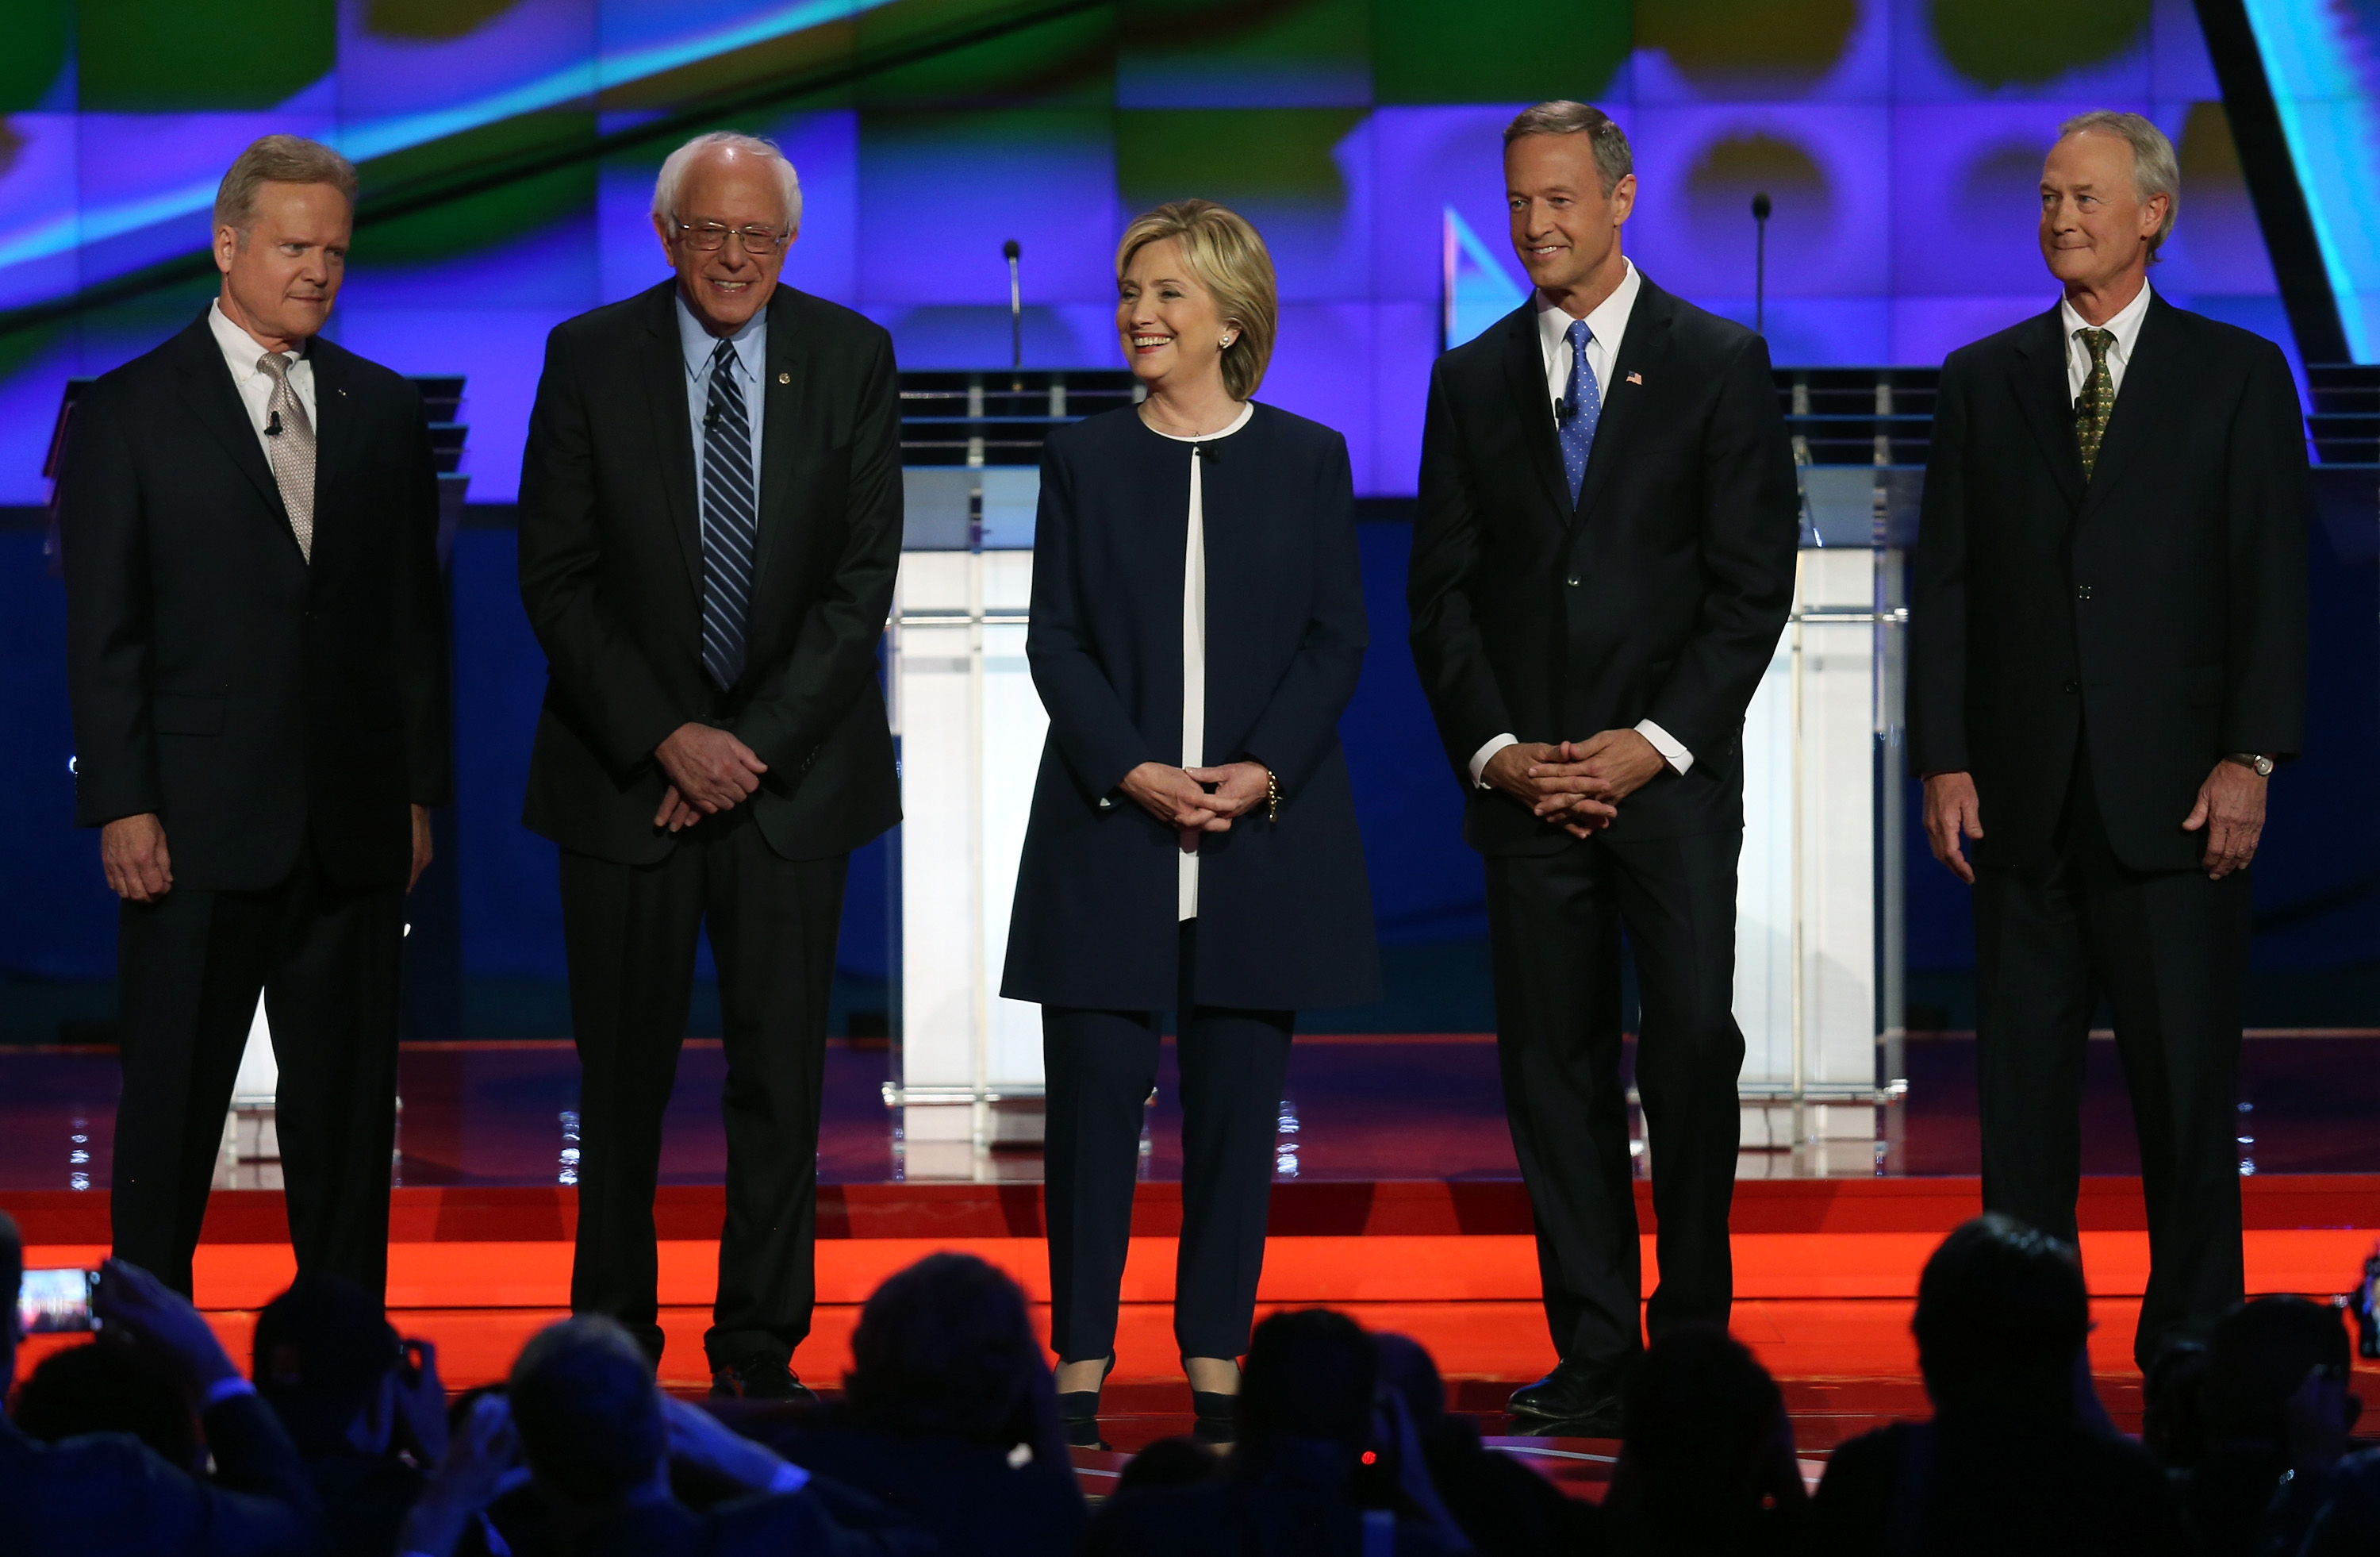 The first Democratic presidential debate, held on October 13